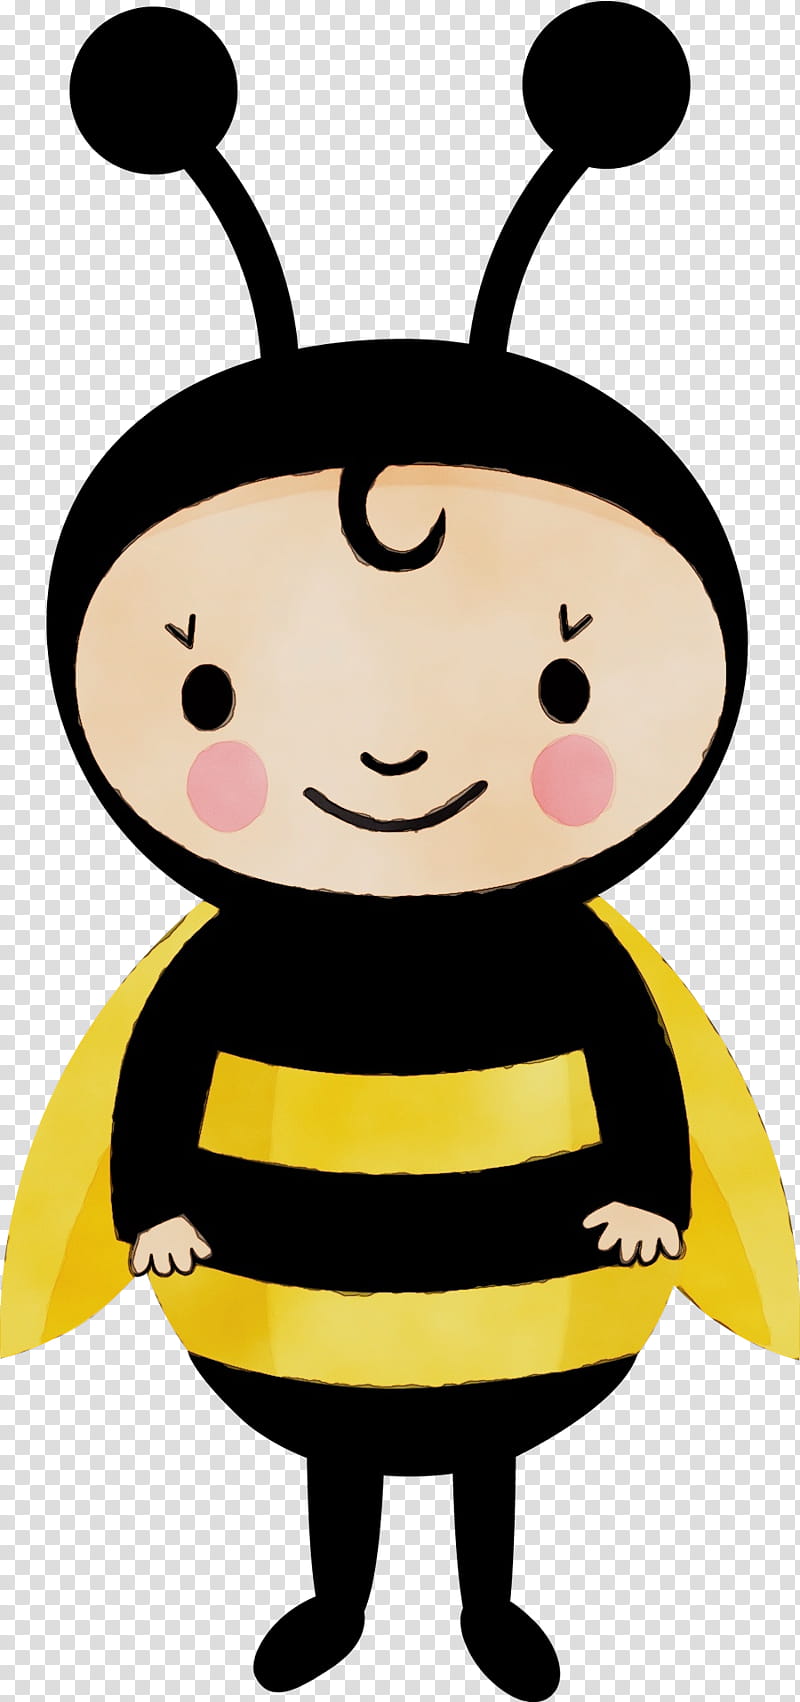 Honey Bee Cartoon Images - Free Download on Freepik